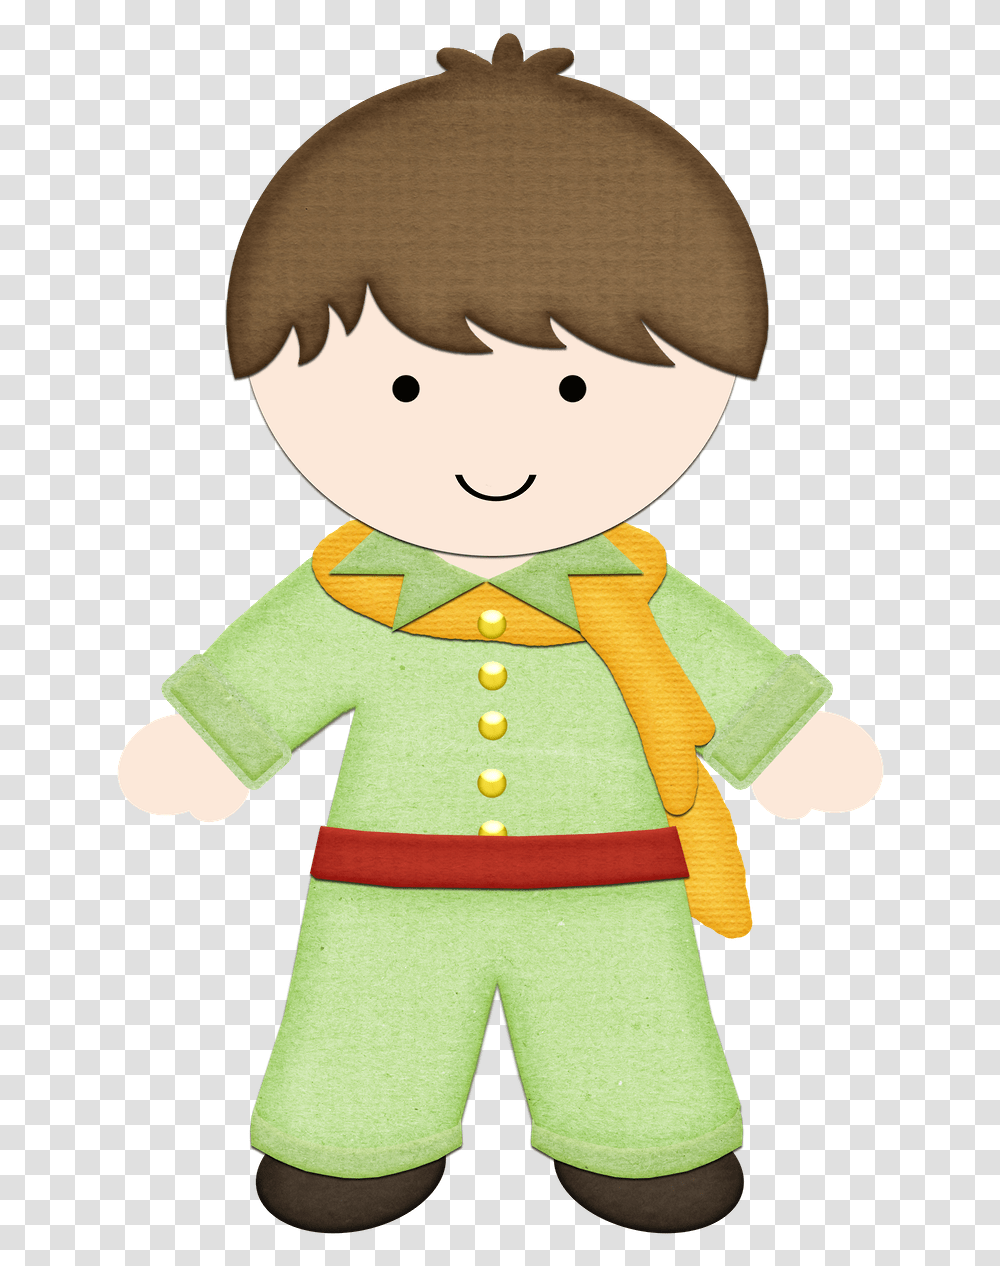 Cute Prince Clip Art Prncipe Cute, Elf, Doll, Toy, Person Transparent Png